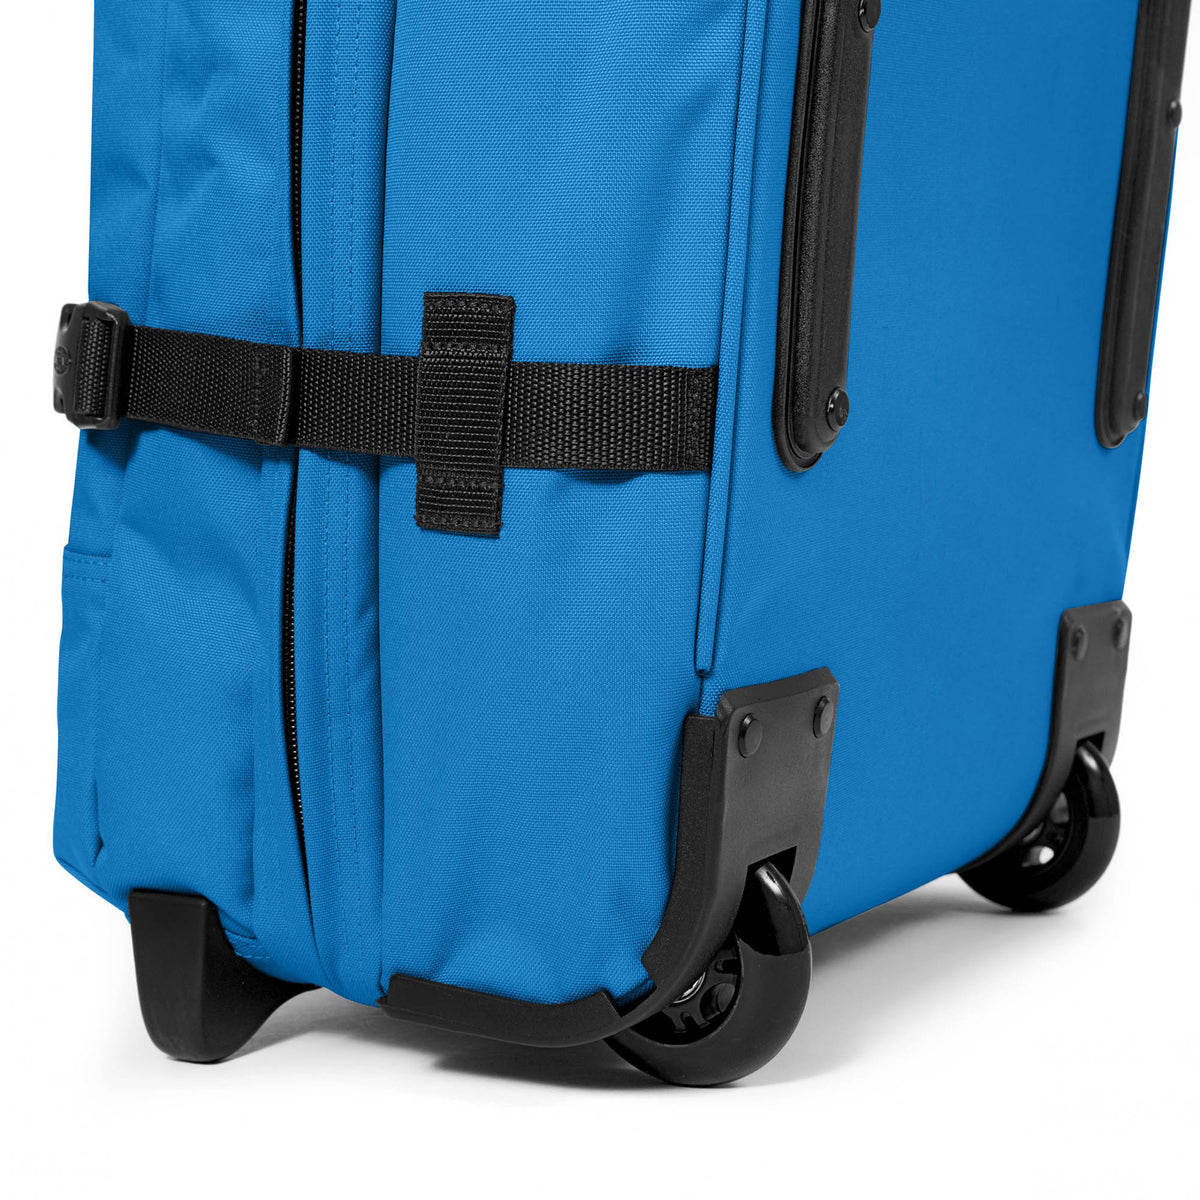 Eastpak Tranverz S Cabin Suitcase - Vibrant Blue